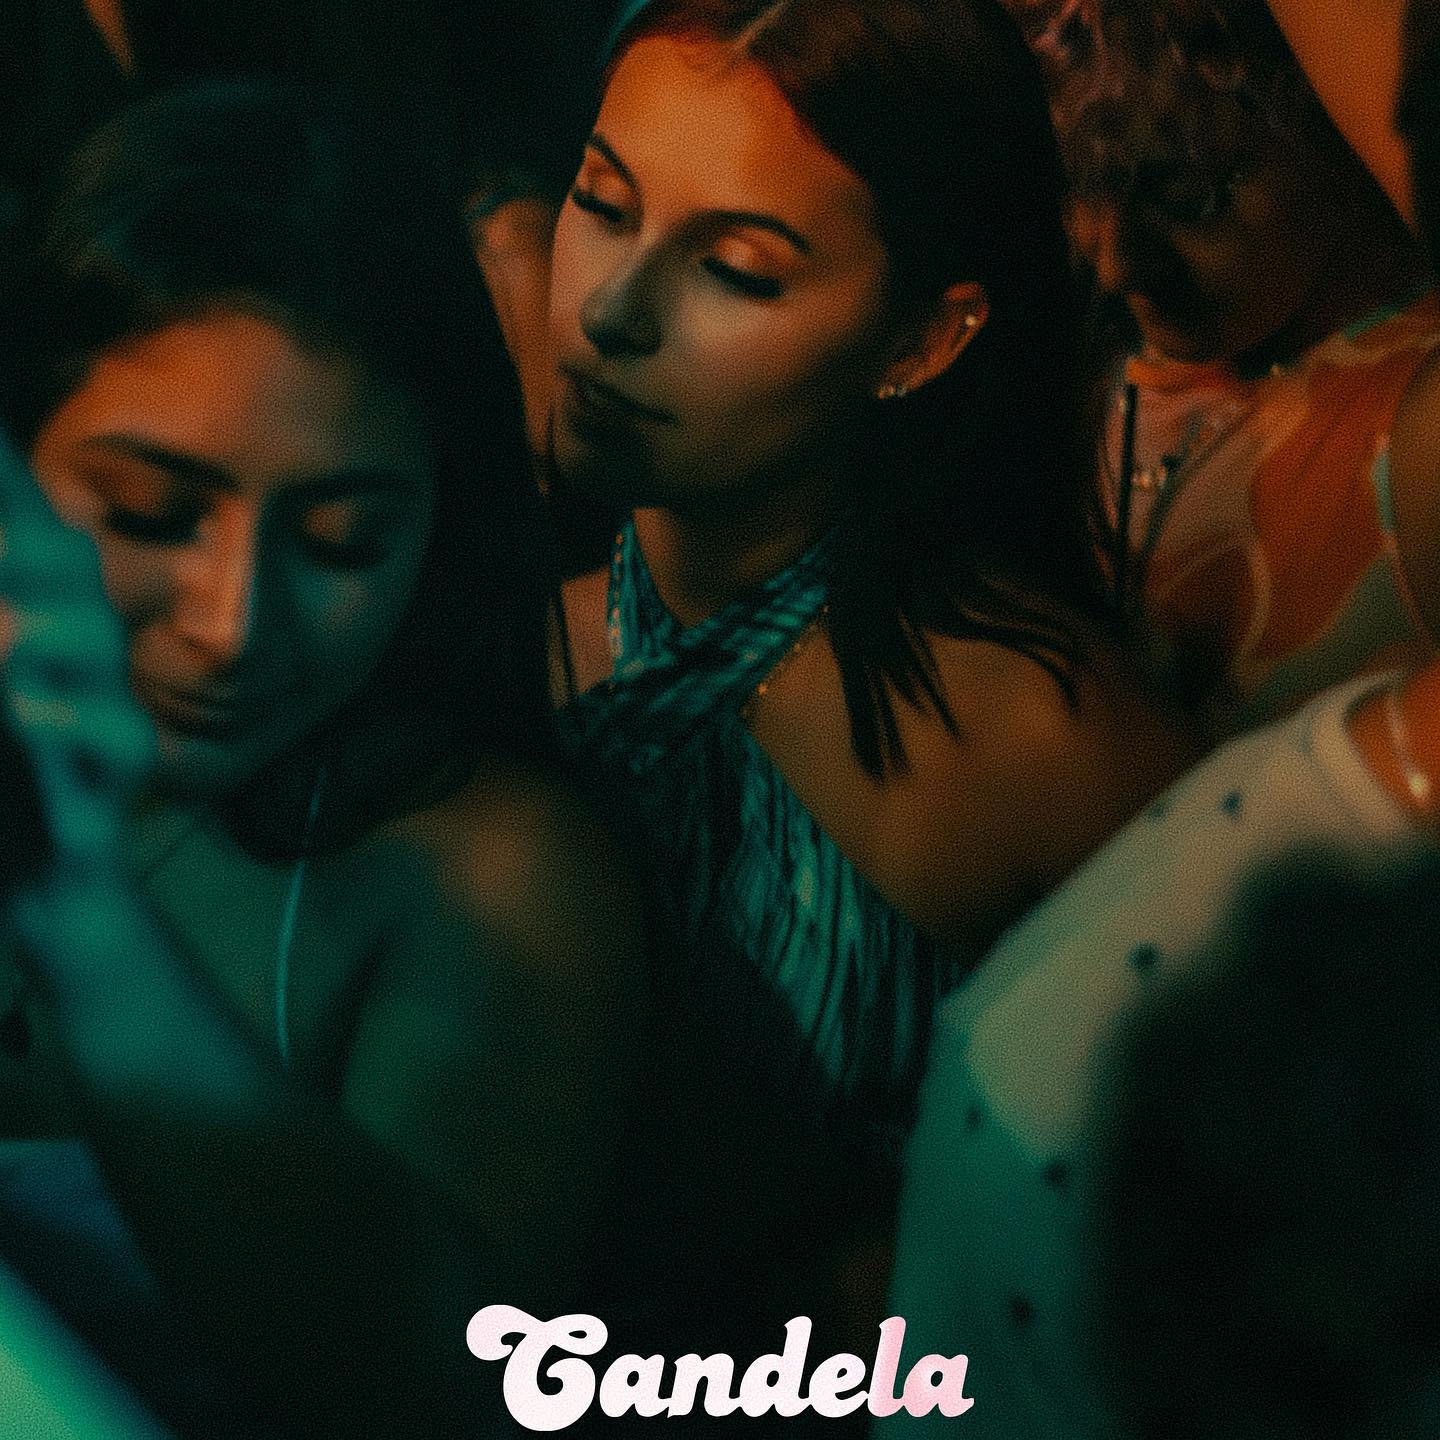 District Nightclub Atlanta presents Candela 4th Anniversary Party